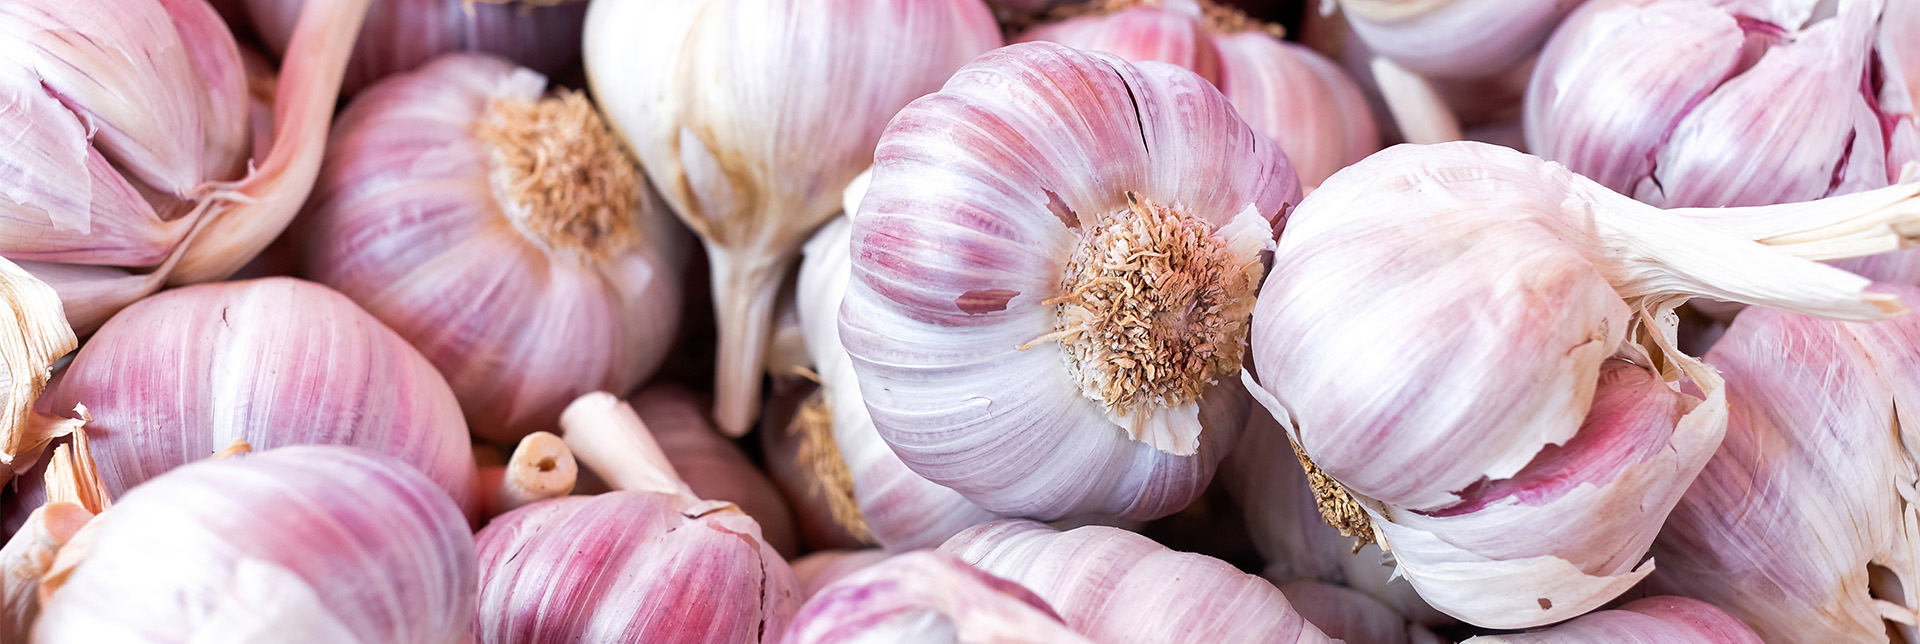 https://www.foodunfolded.com/media/images/header-banner-garlic.jpg